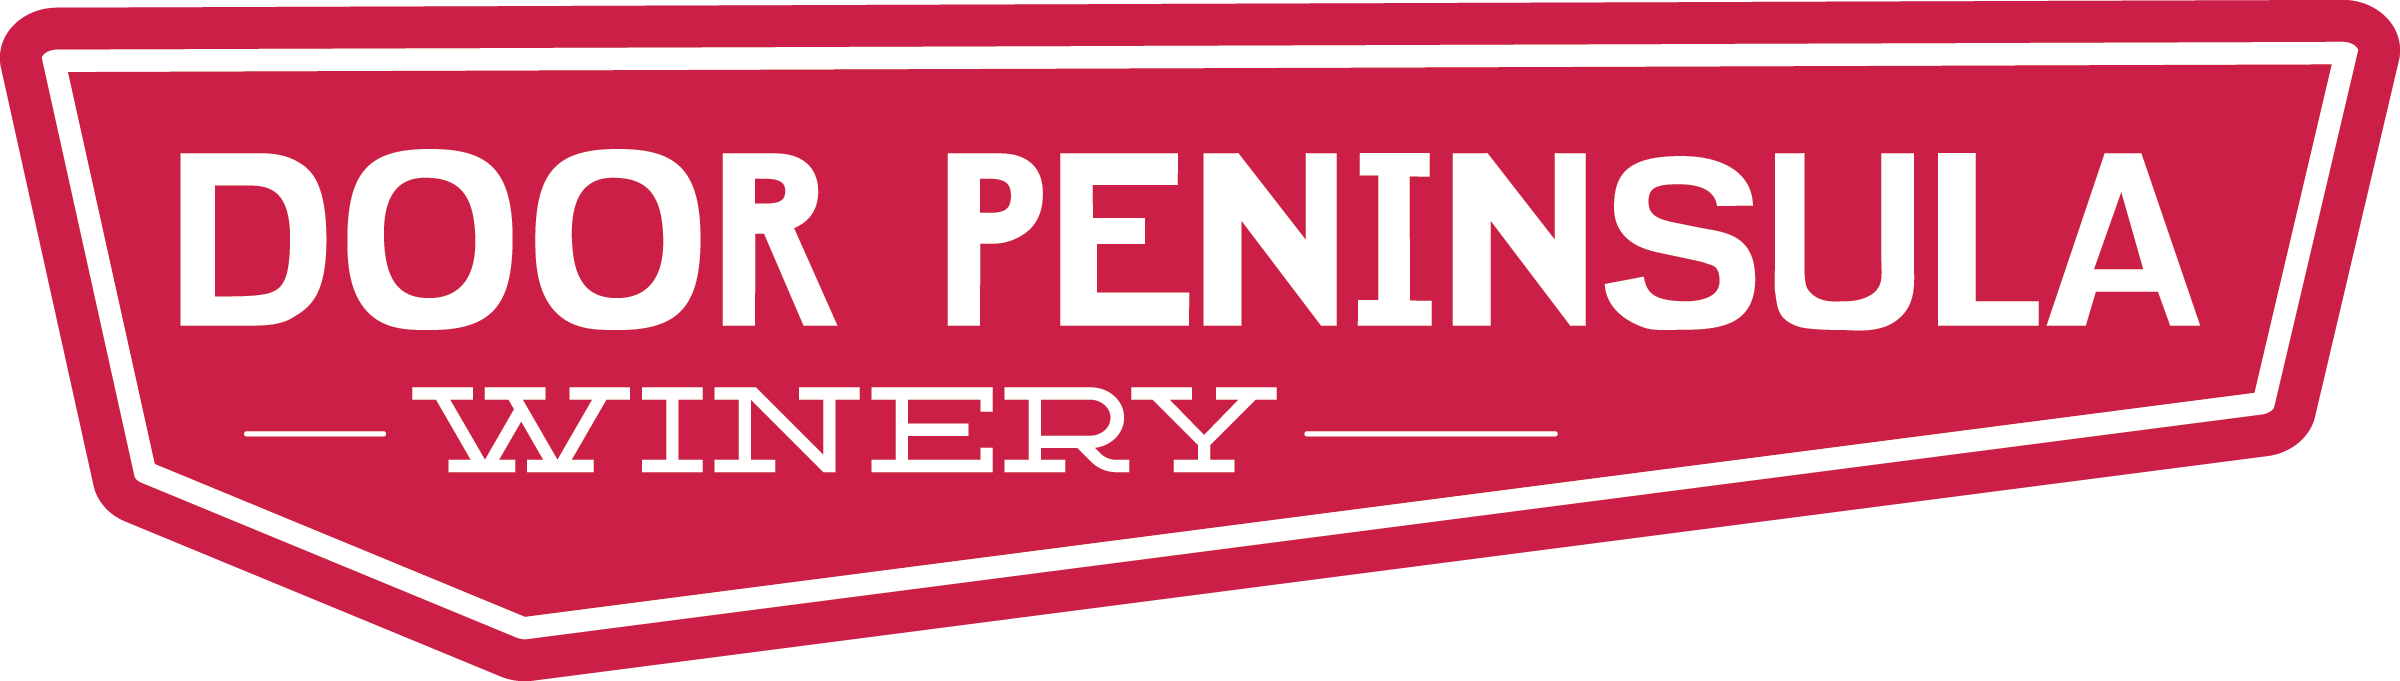 Door-Peninsula-Winery-Logo.png